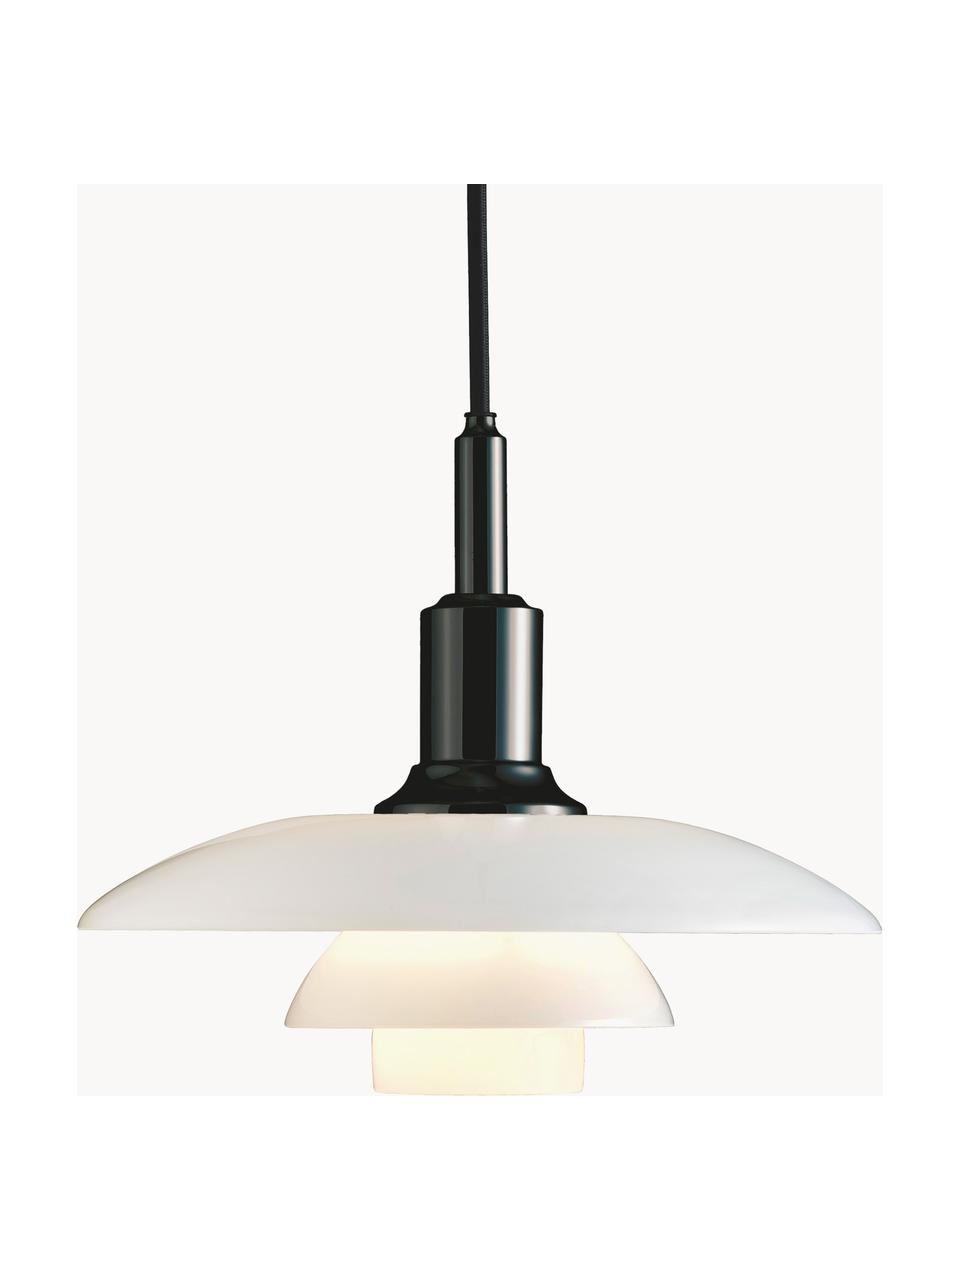 Kleine hanglamp PH 3/2, mondgeblazen, Lampenkap: opaalglas, mondgeblazen, Zwart, wit, Ø 29 x H 24 cm